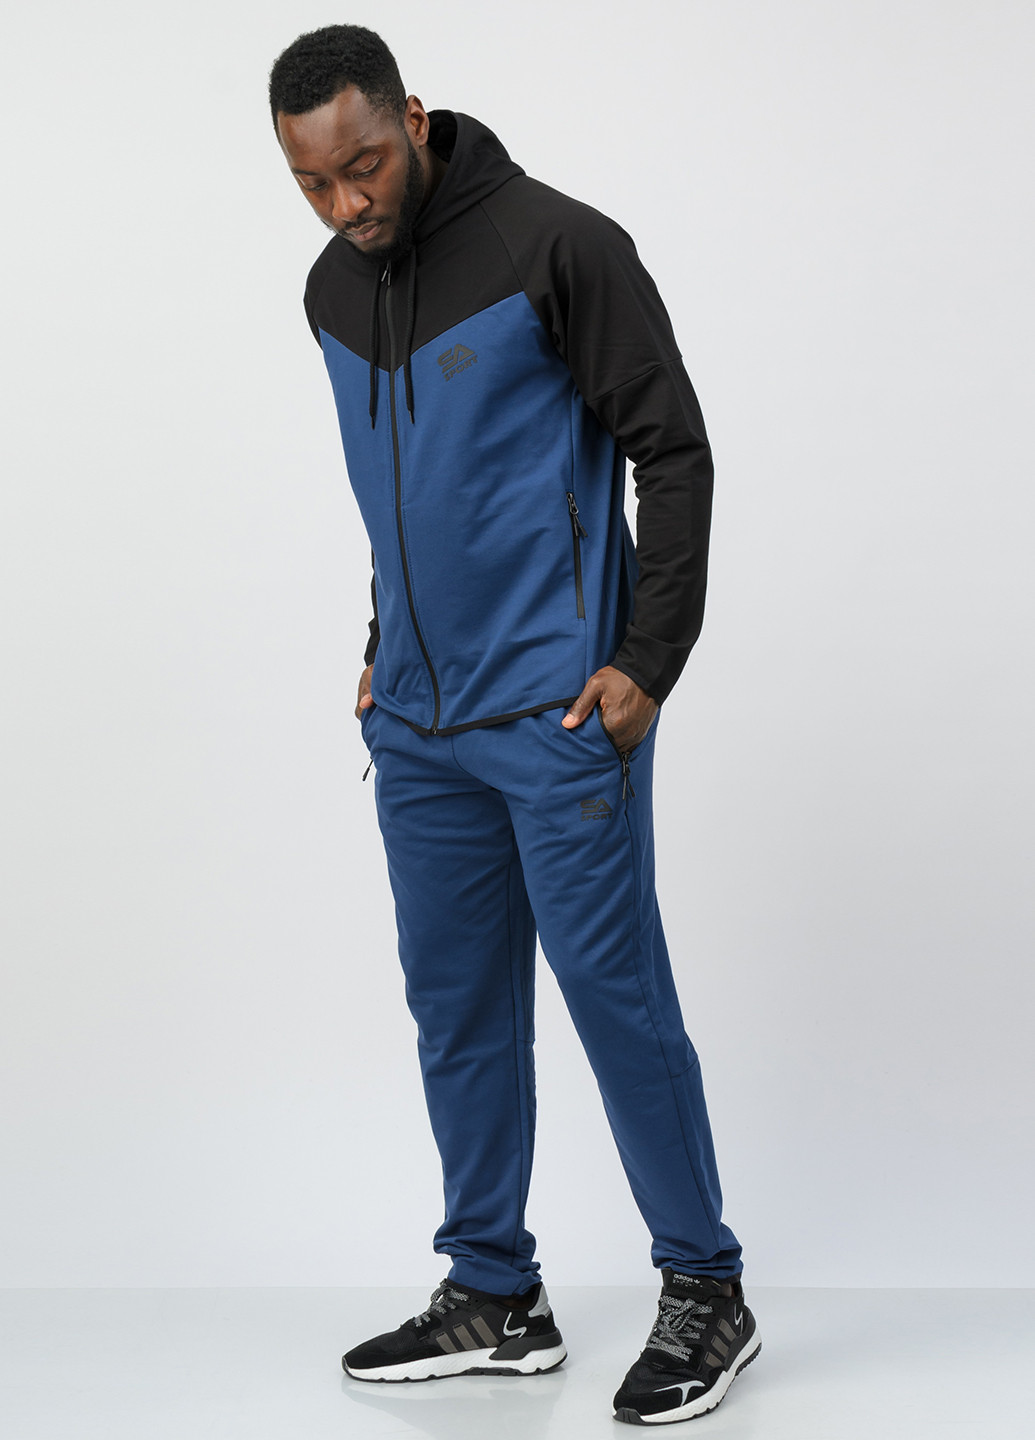 Темно-синий демисезонный костюм (толстовка, брюки) брючный SA-sport